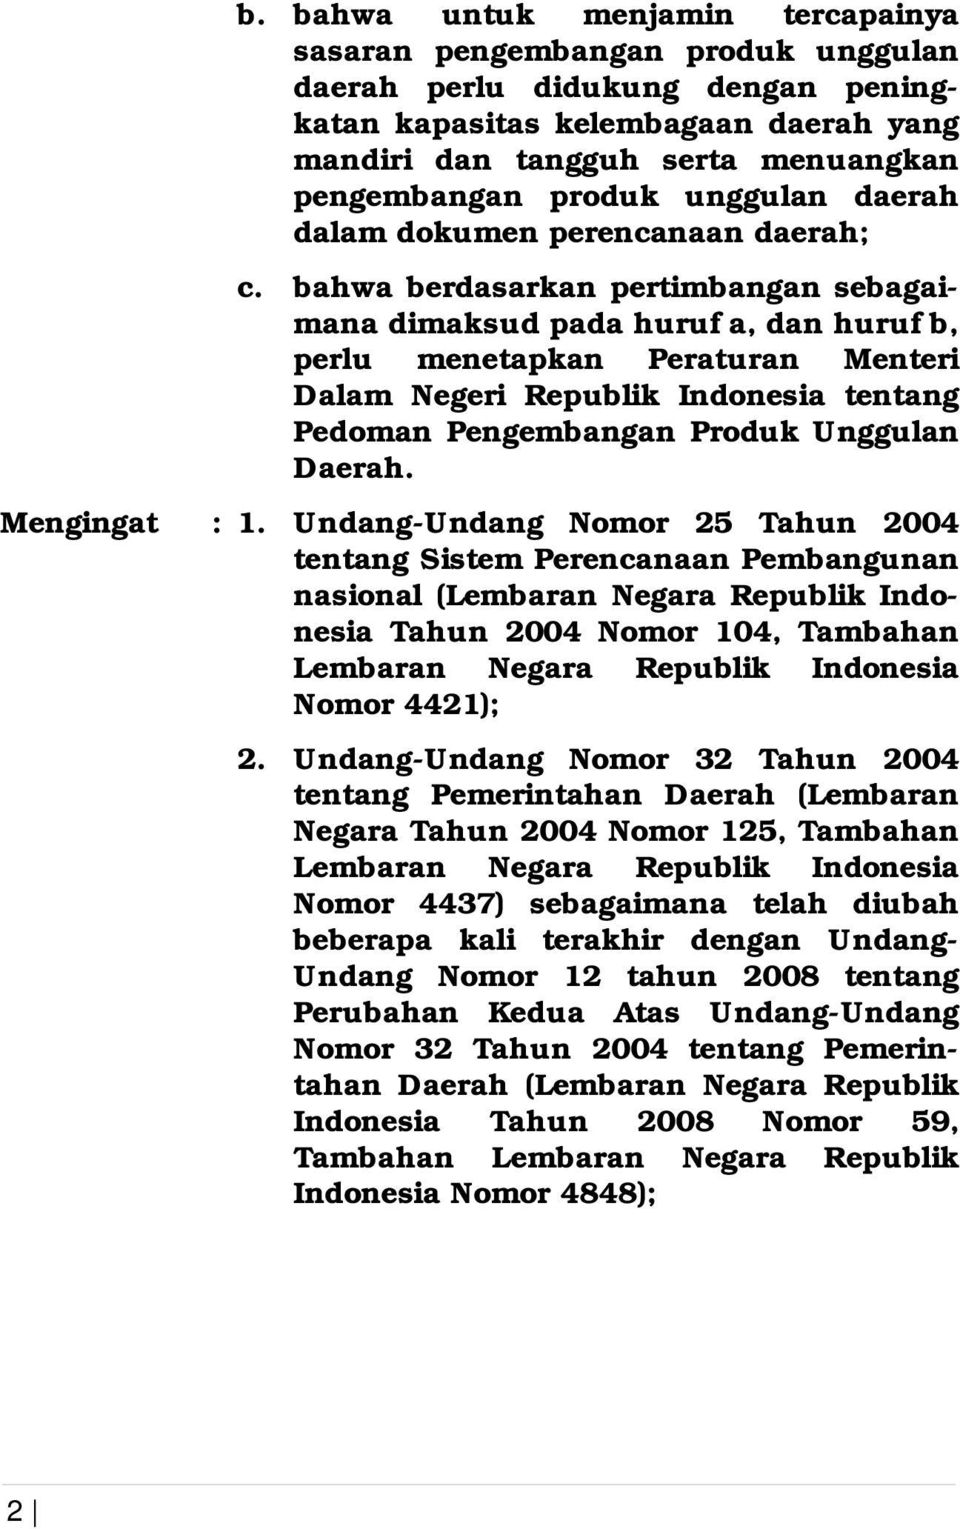 bahwa berdasarkan pertimbangan sebagaimana dimaksud pada huruf a, dan huruf b, perlu menetapkan Peraturan Menteri Dalam Negeri Republik Indonesia tentang Pedoman Pengembangan Produk Unggulan Daerah.